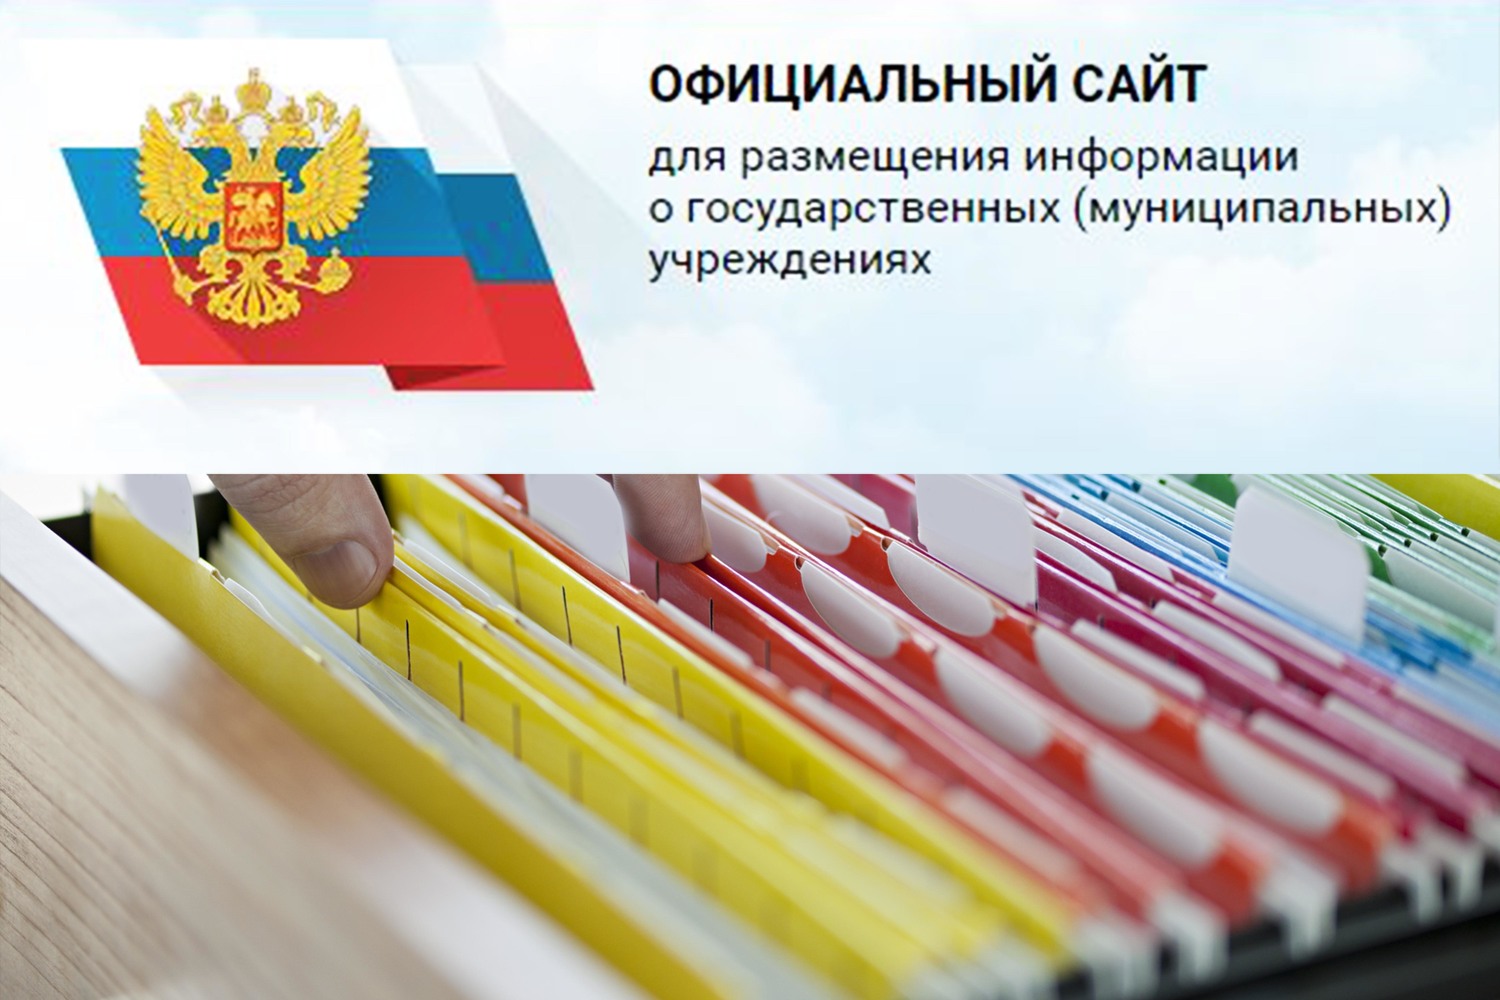 Центр в системе bus.gov.ru